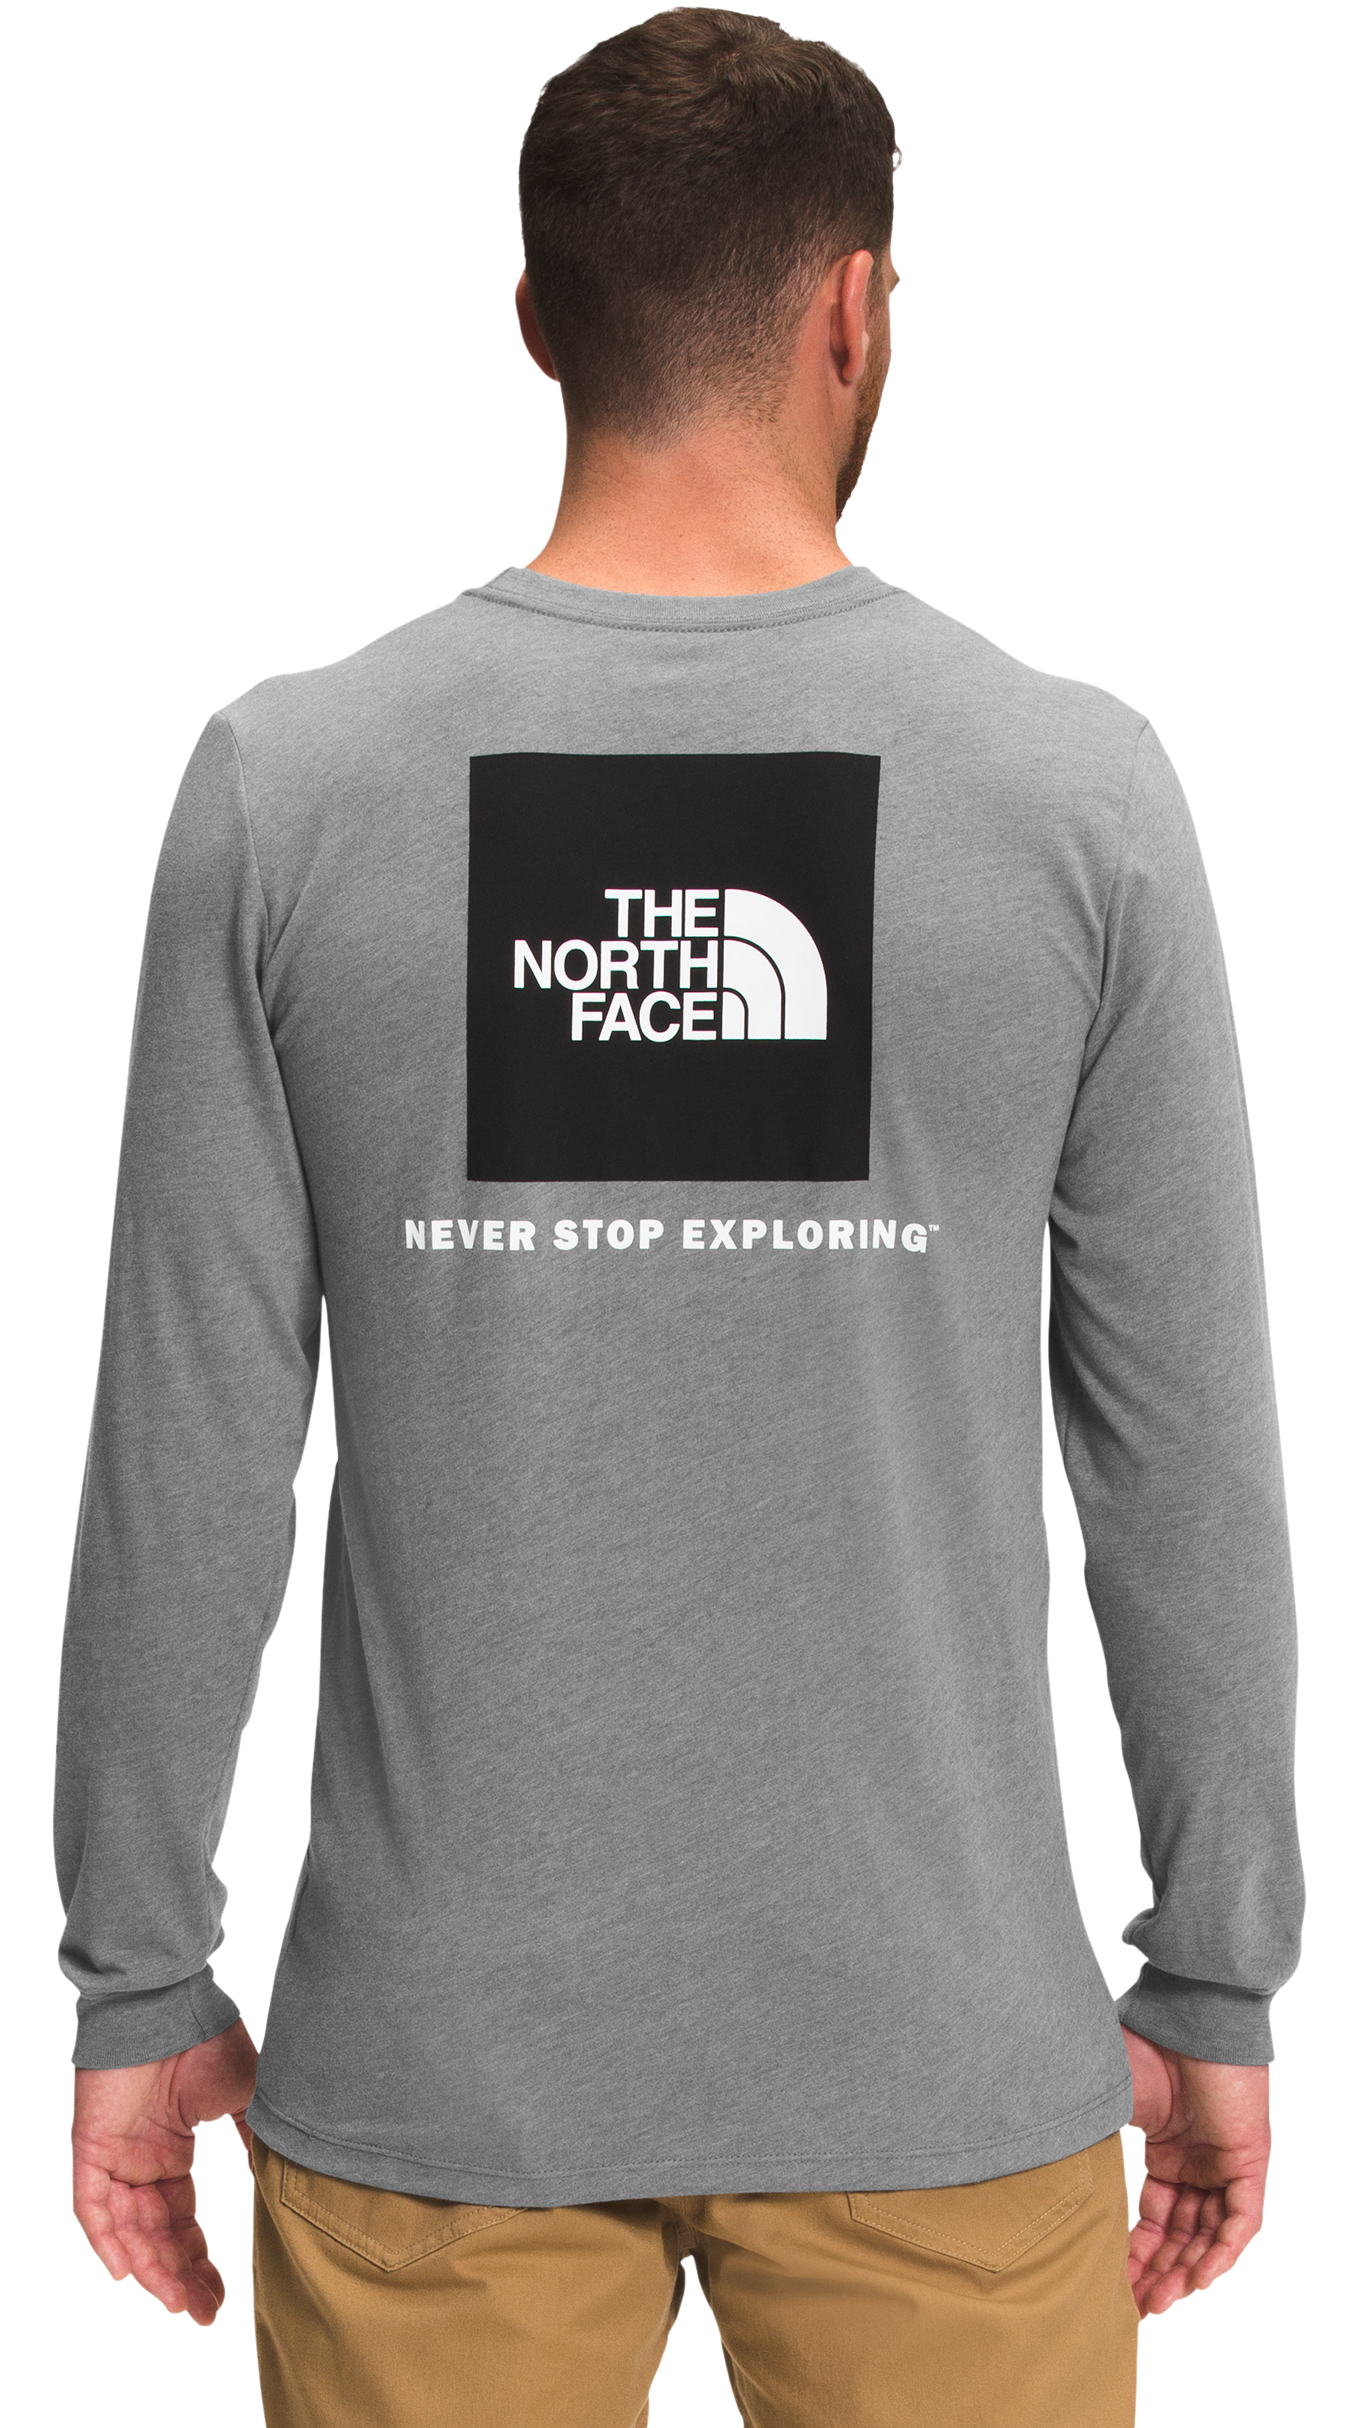 The North Face Box NSE Long-Sleeve Shirt for Men - TNF Medium Grey Heather/TNF Black - M